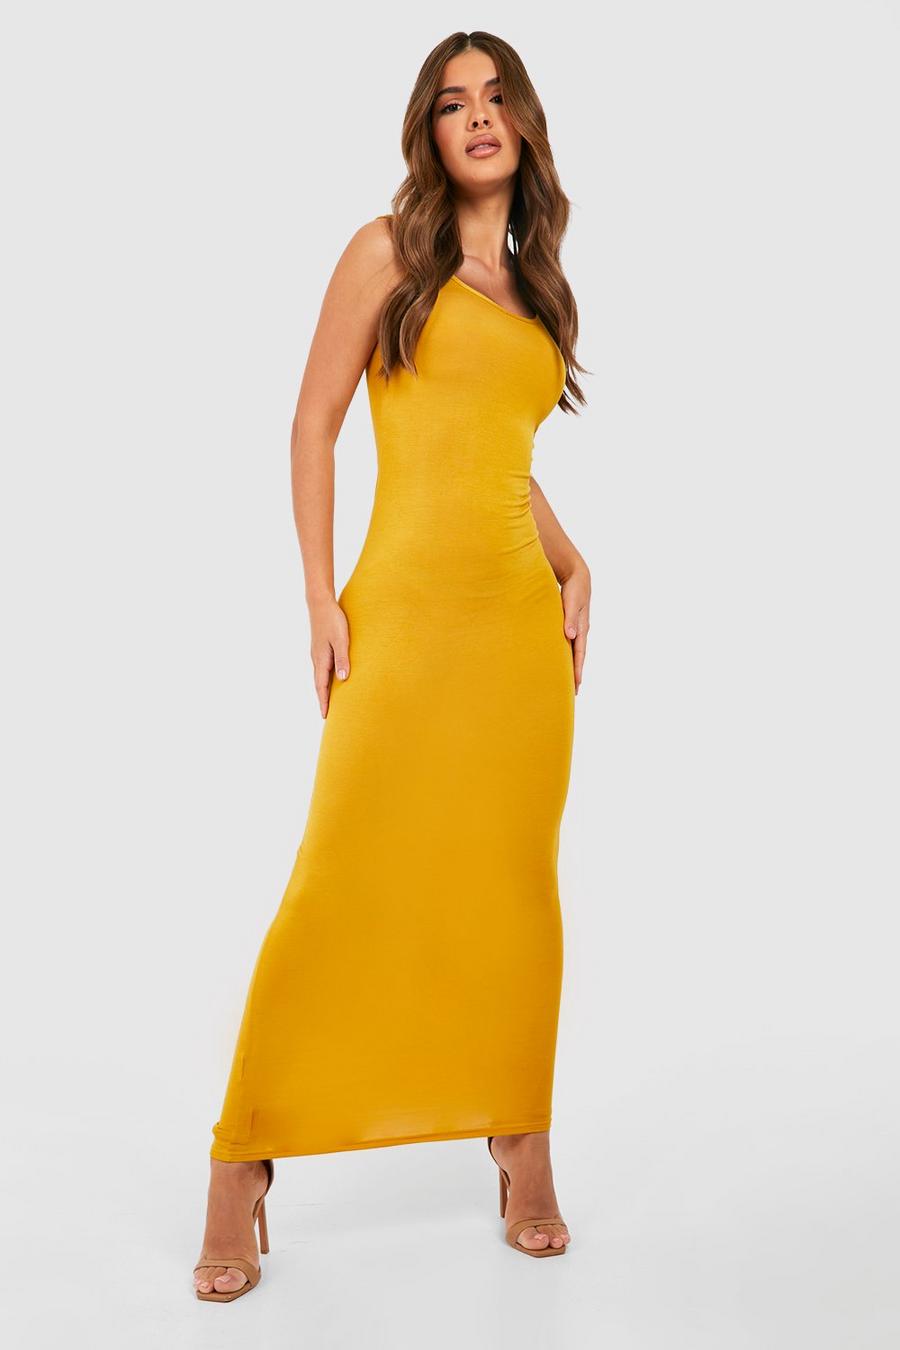 Mustard yellow Maxi Dress